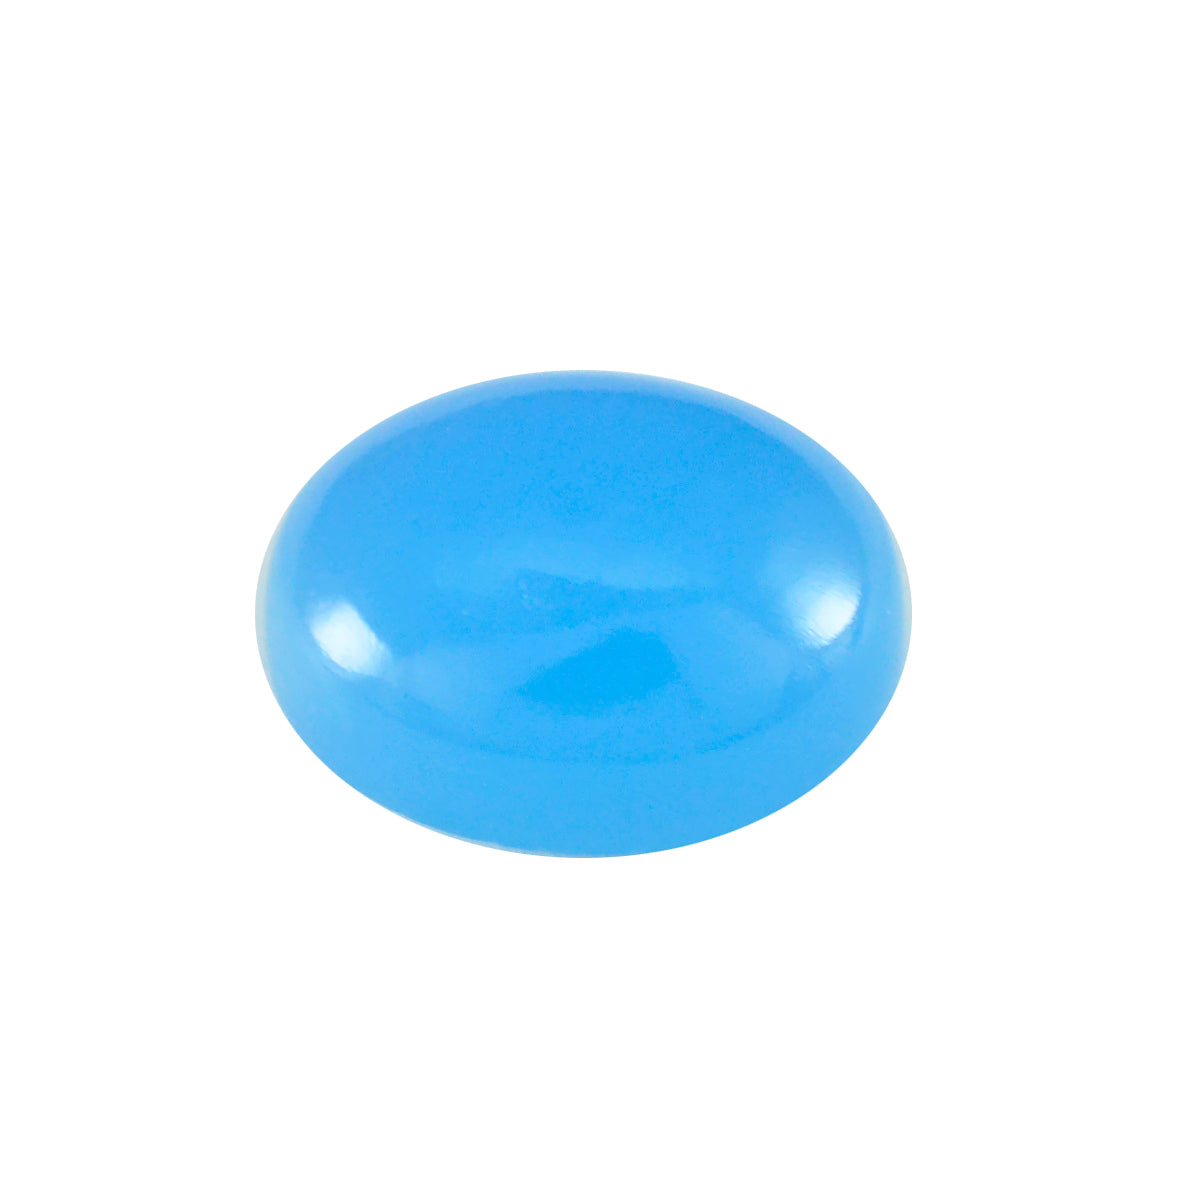 Riyogems 1PC blauwe chalcedoon cabochon 10x12 mm ovale vorm schoonheid kwaliteit edelsteen